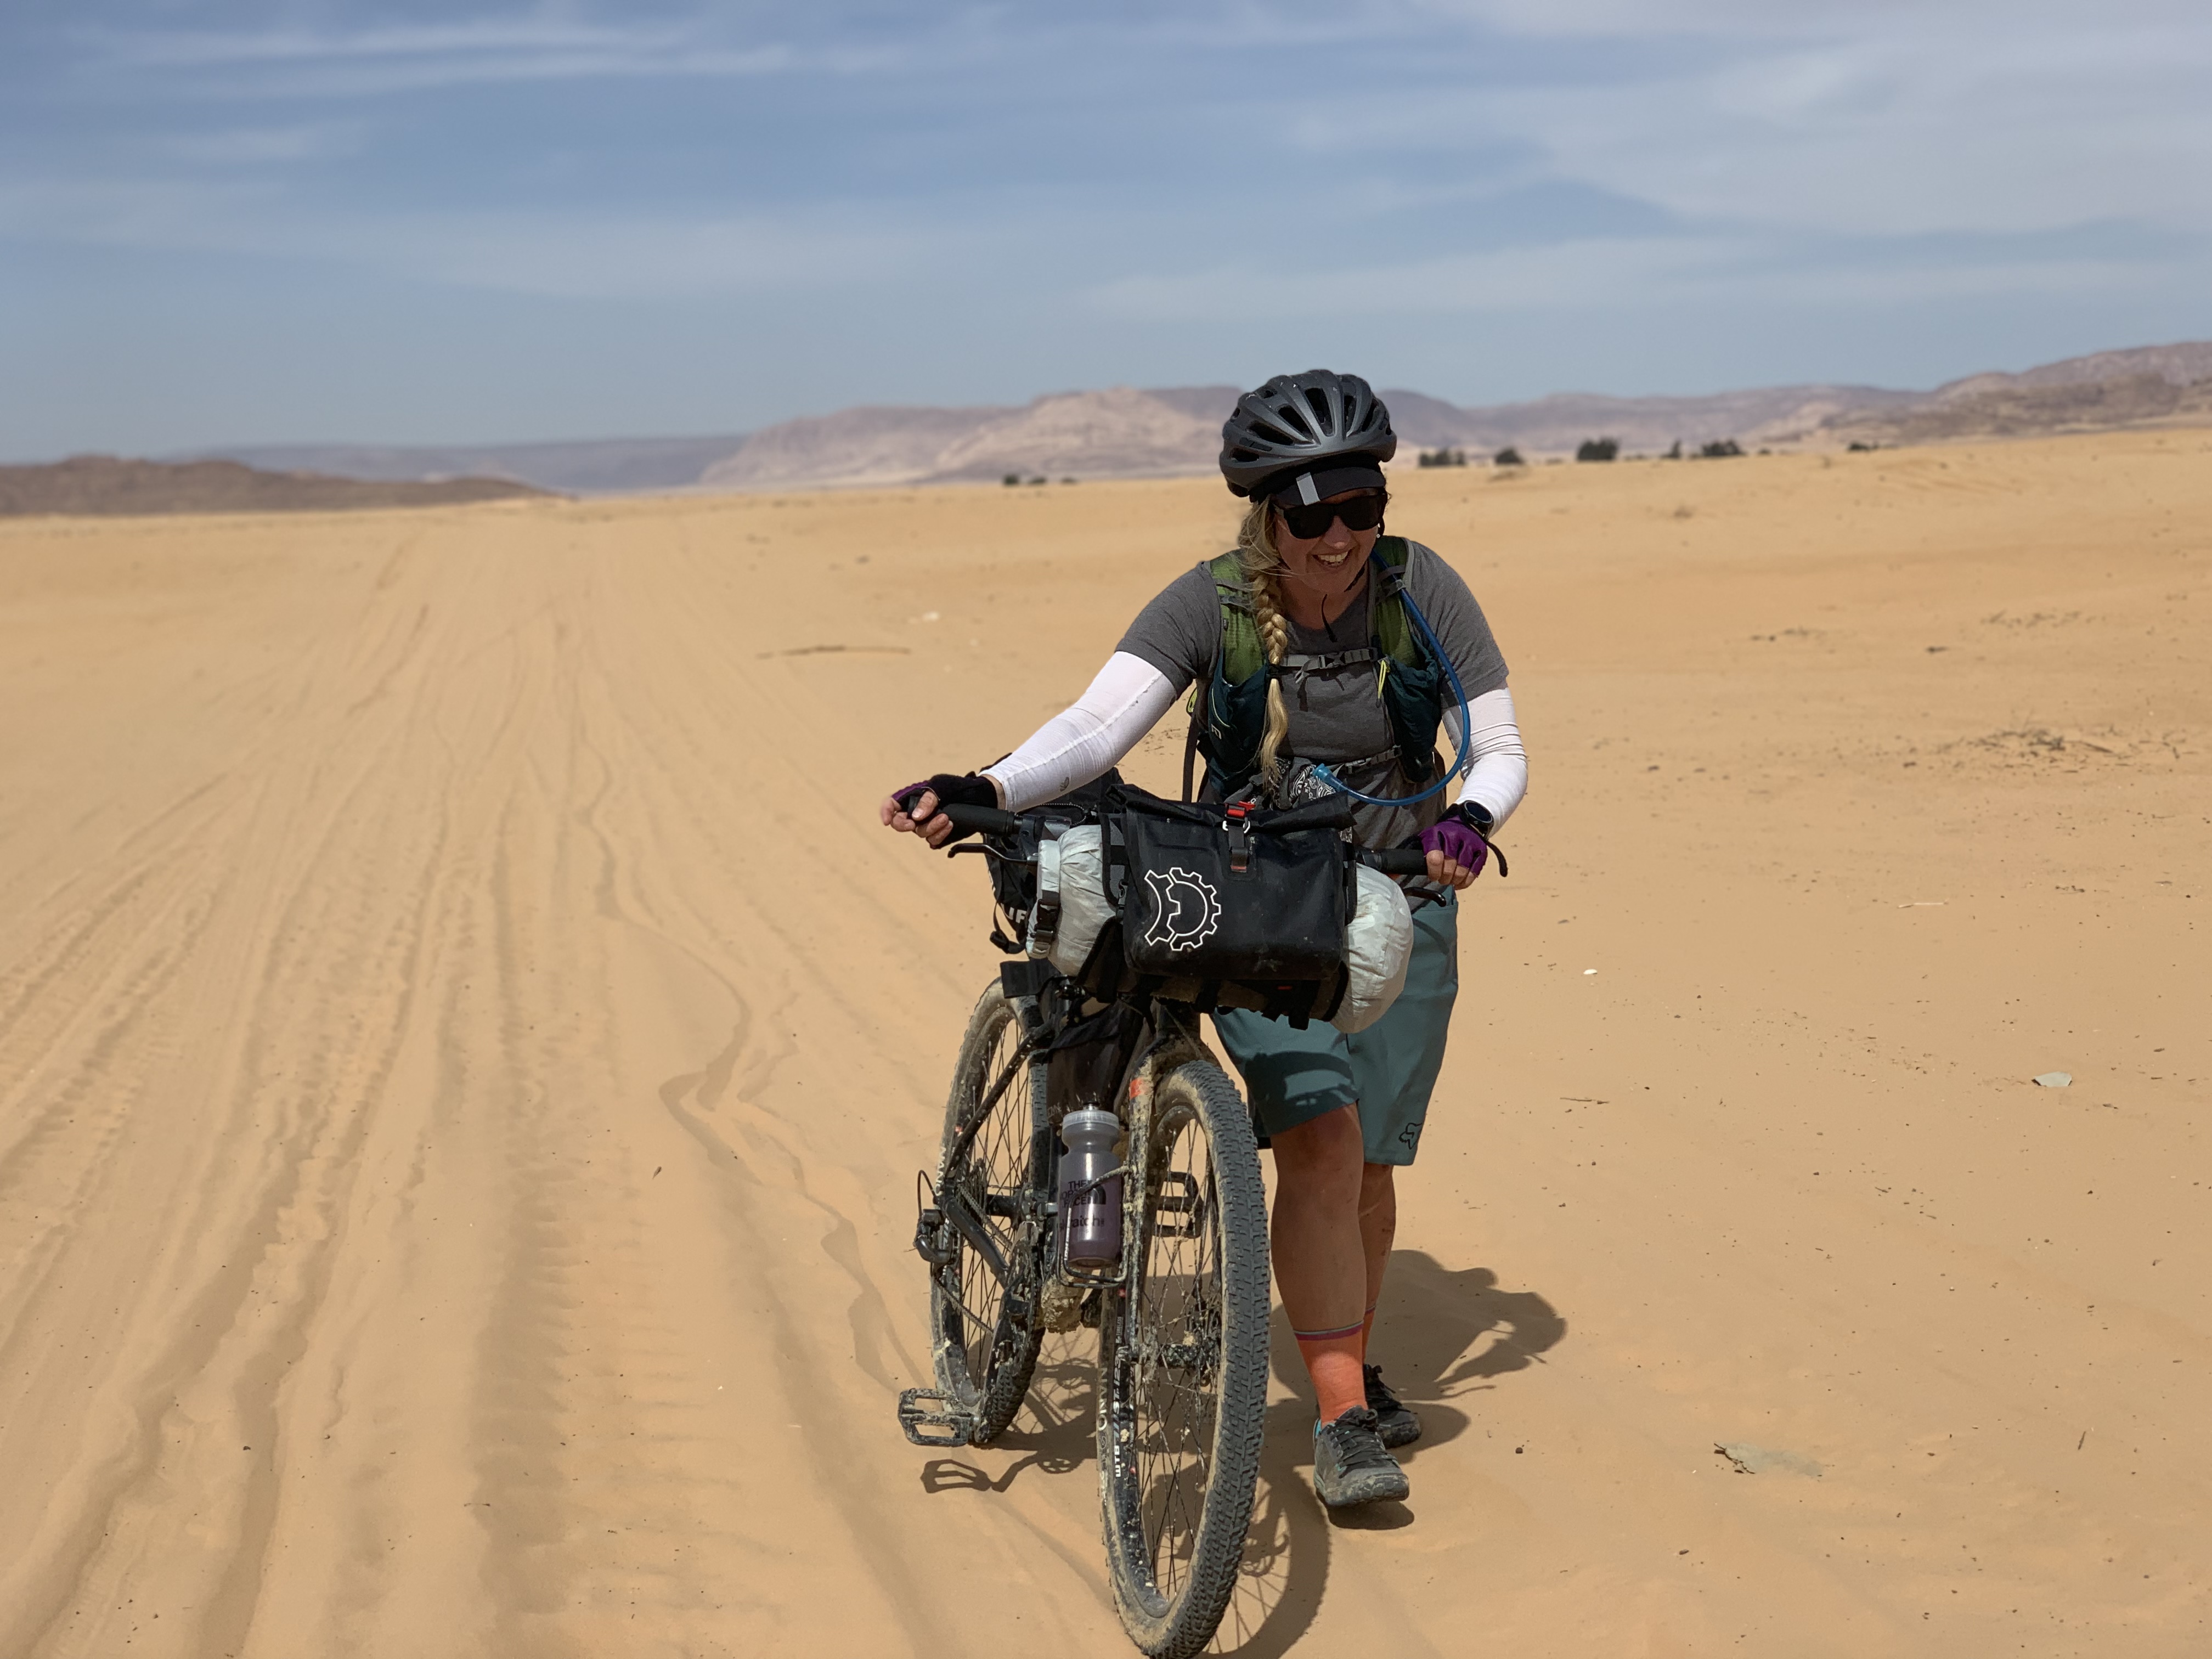  Bikepacking Across Jordan: An Adventure by 2 Ultrarunners